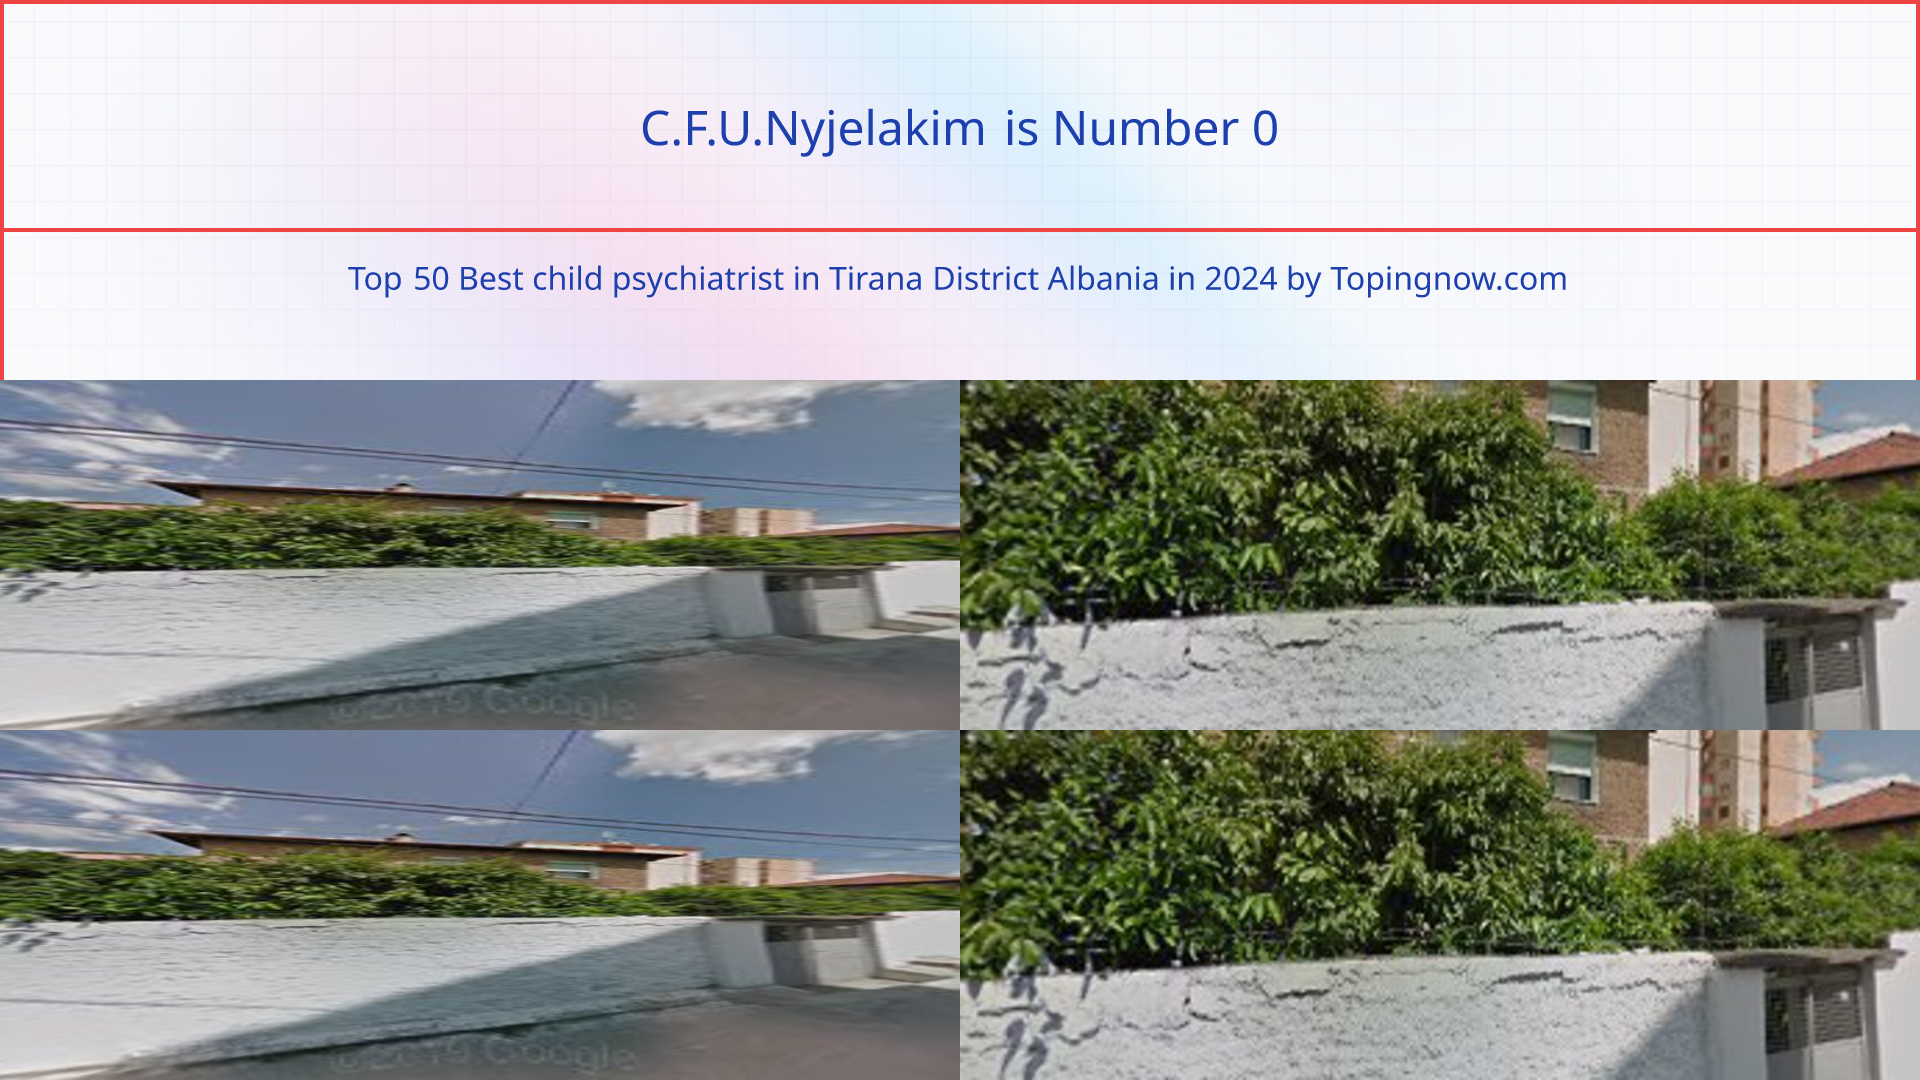 C.F.U.Nyjelakim: Top 50 Best child psychiatrist in Tirana District Albania in 2024